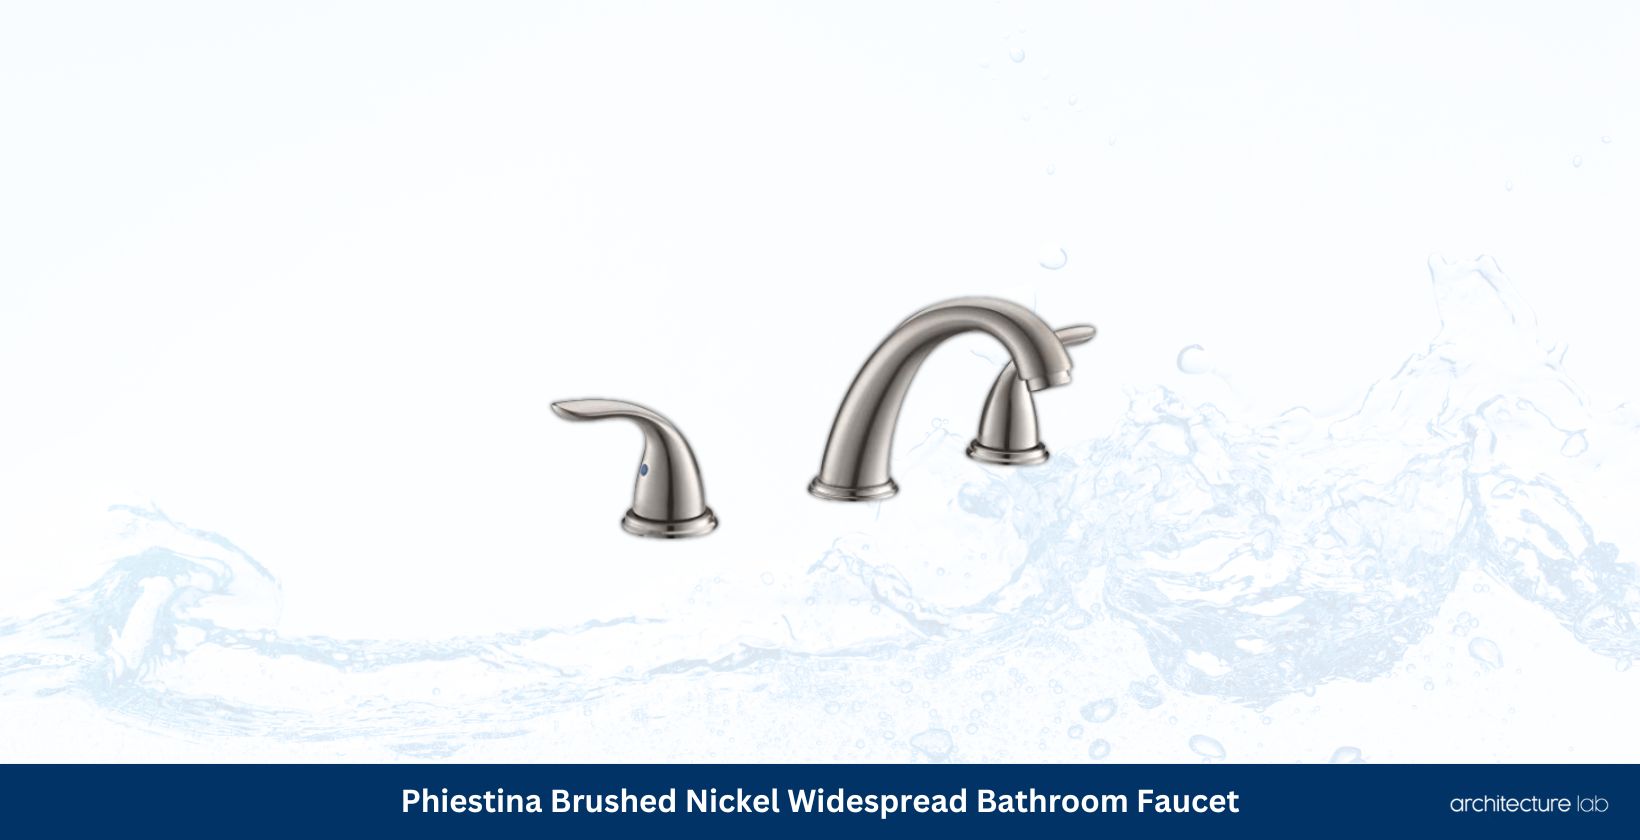 Phiestina brushed nickel widespread bathroom faucet wf008 5 bn